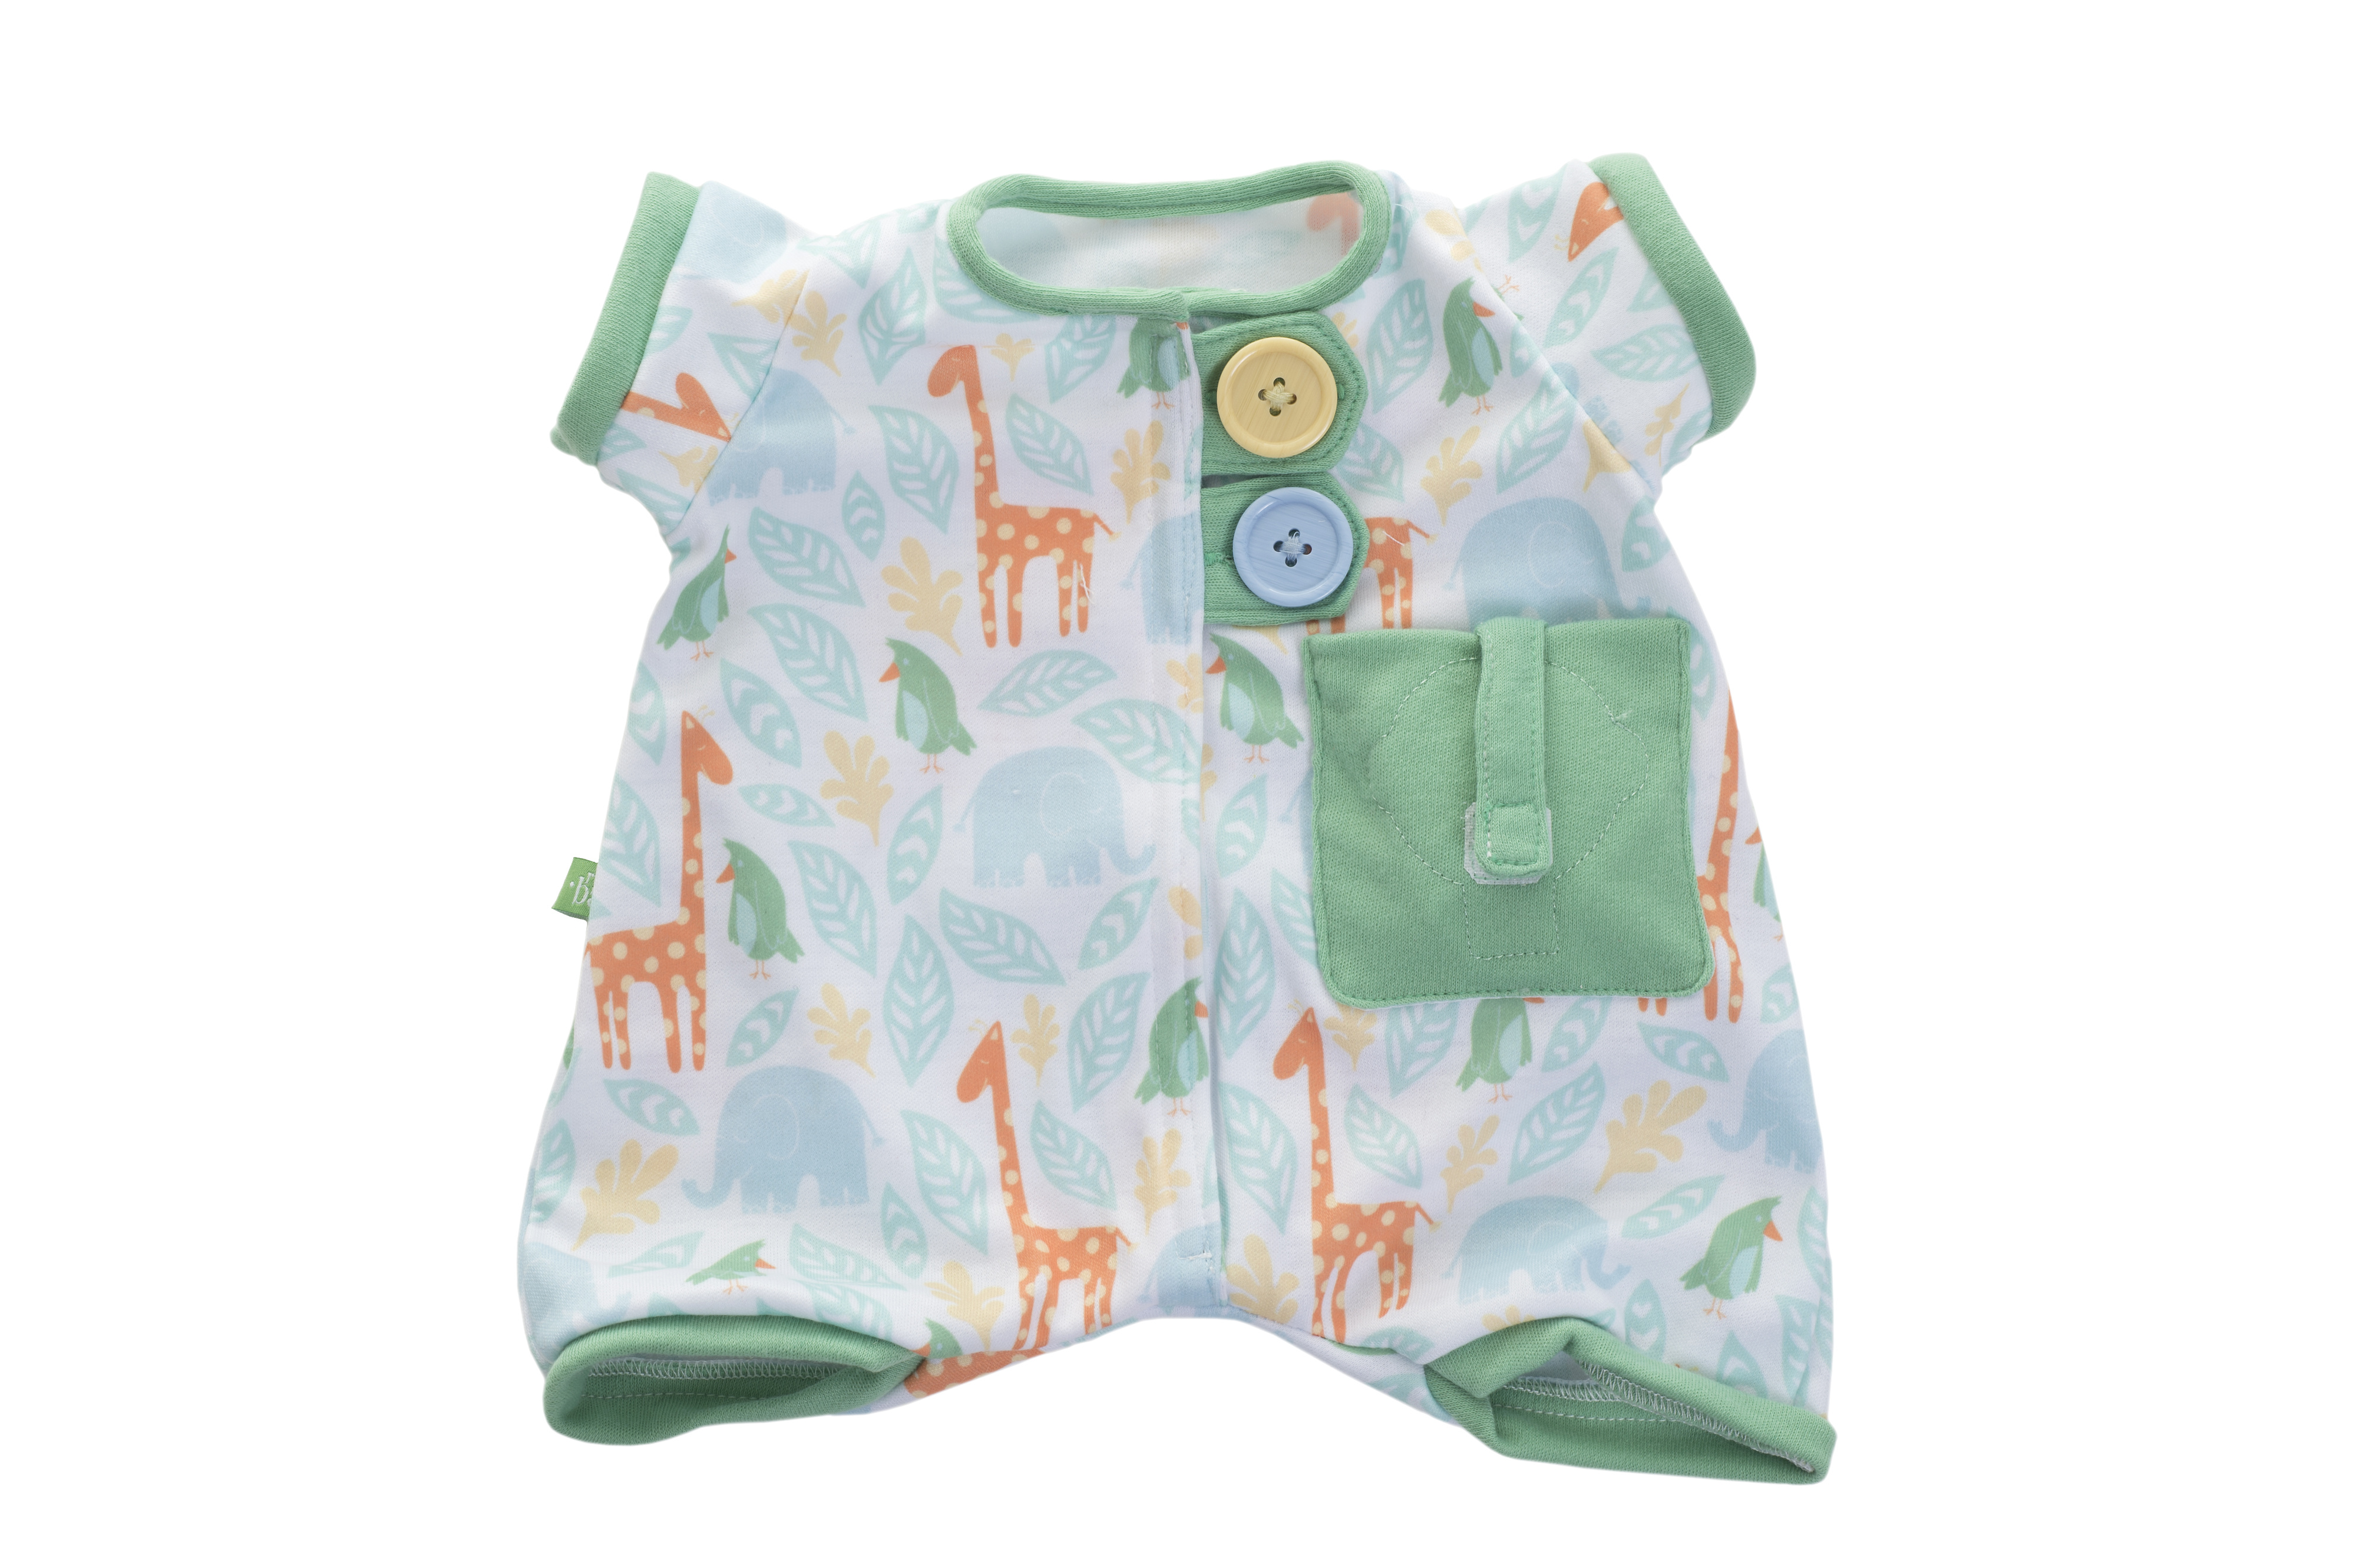 Doll prams & doll pushchairs rubens barn doll clothes green pajamas baby